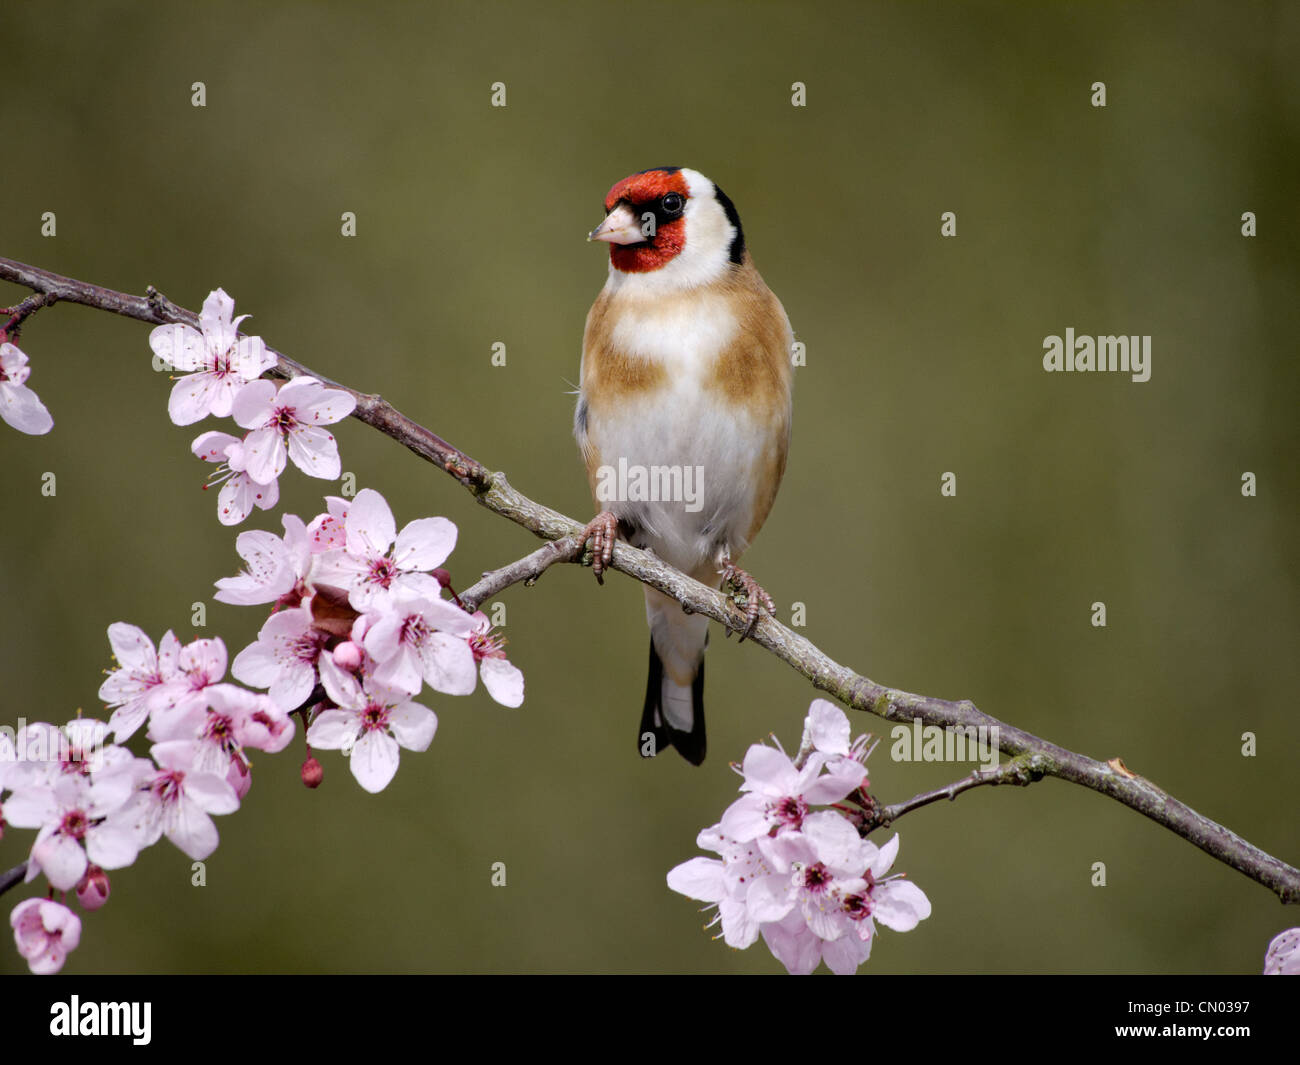 Cardellino, Carduelis carduelis, singolo uccello su blossom, Warwickshire, Marzo 2012 Foto Stock